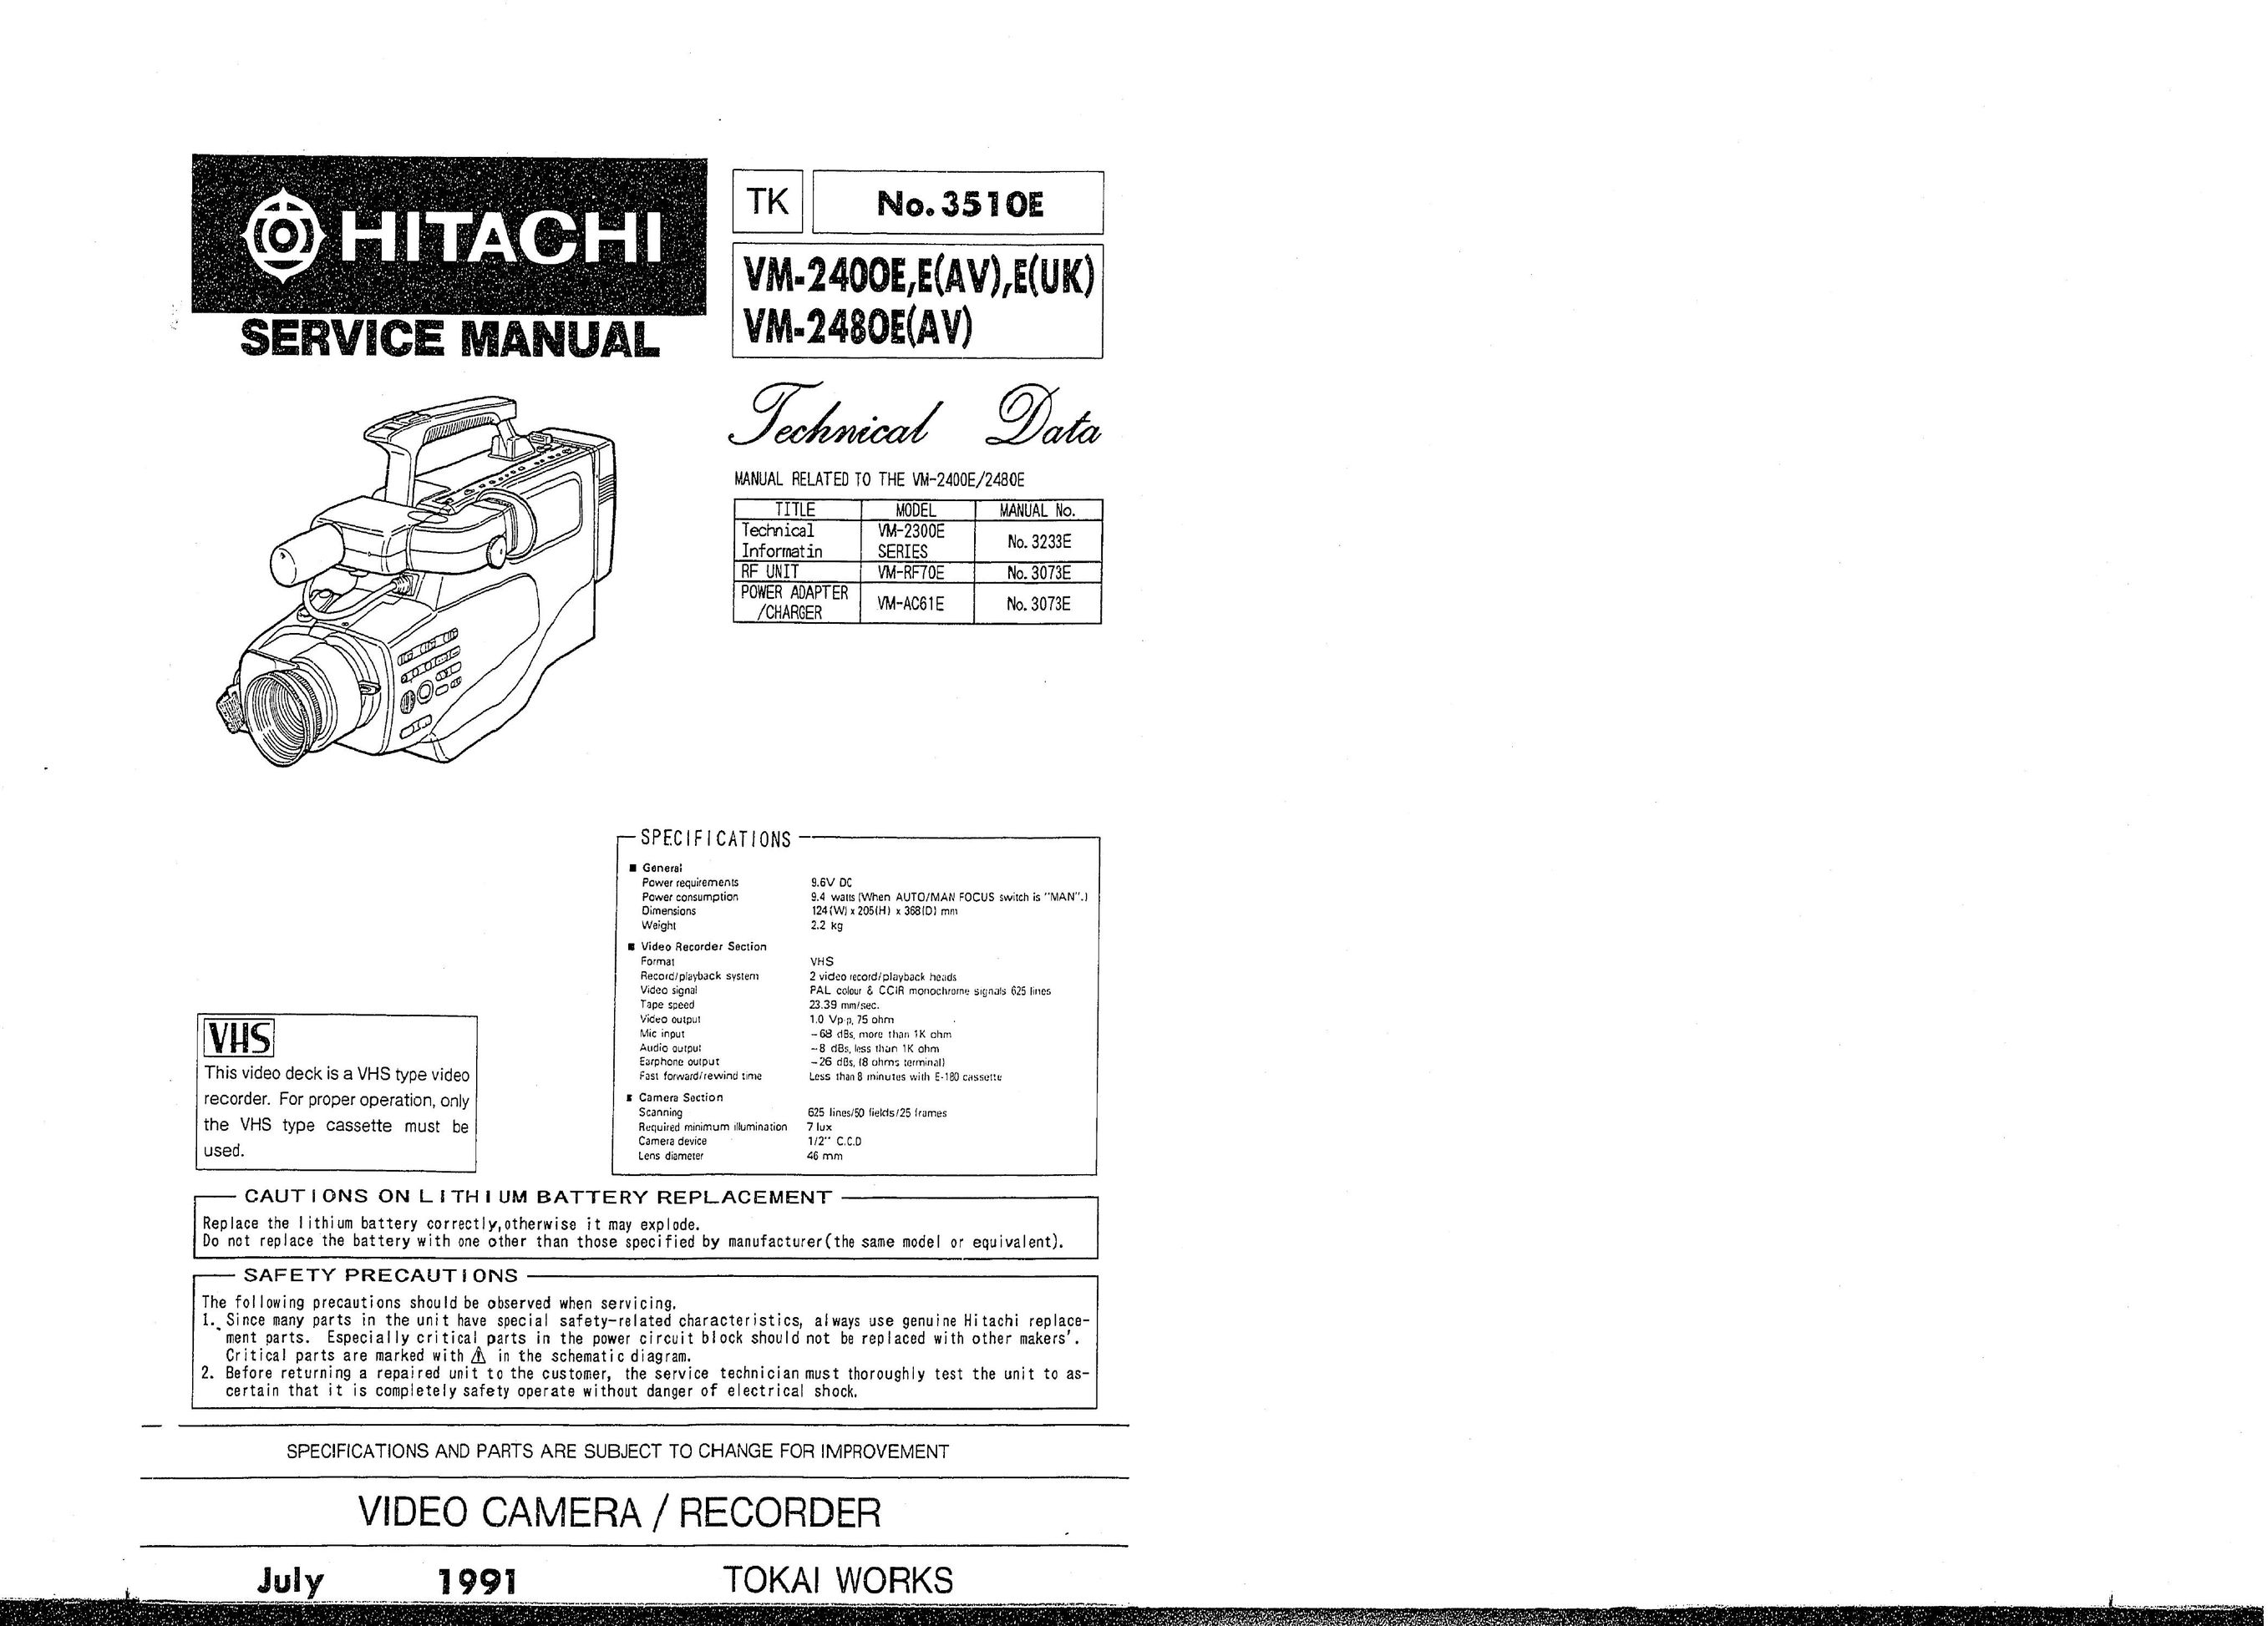 Hitachi VM-24BDE DVR User Manual